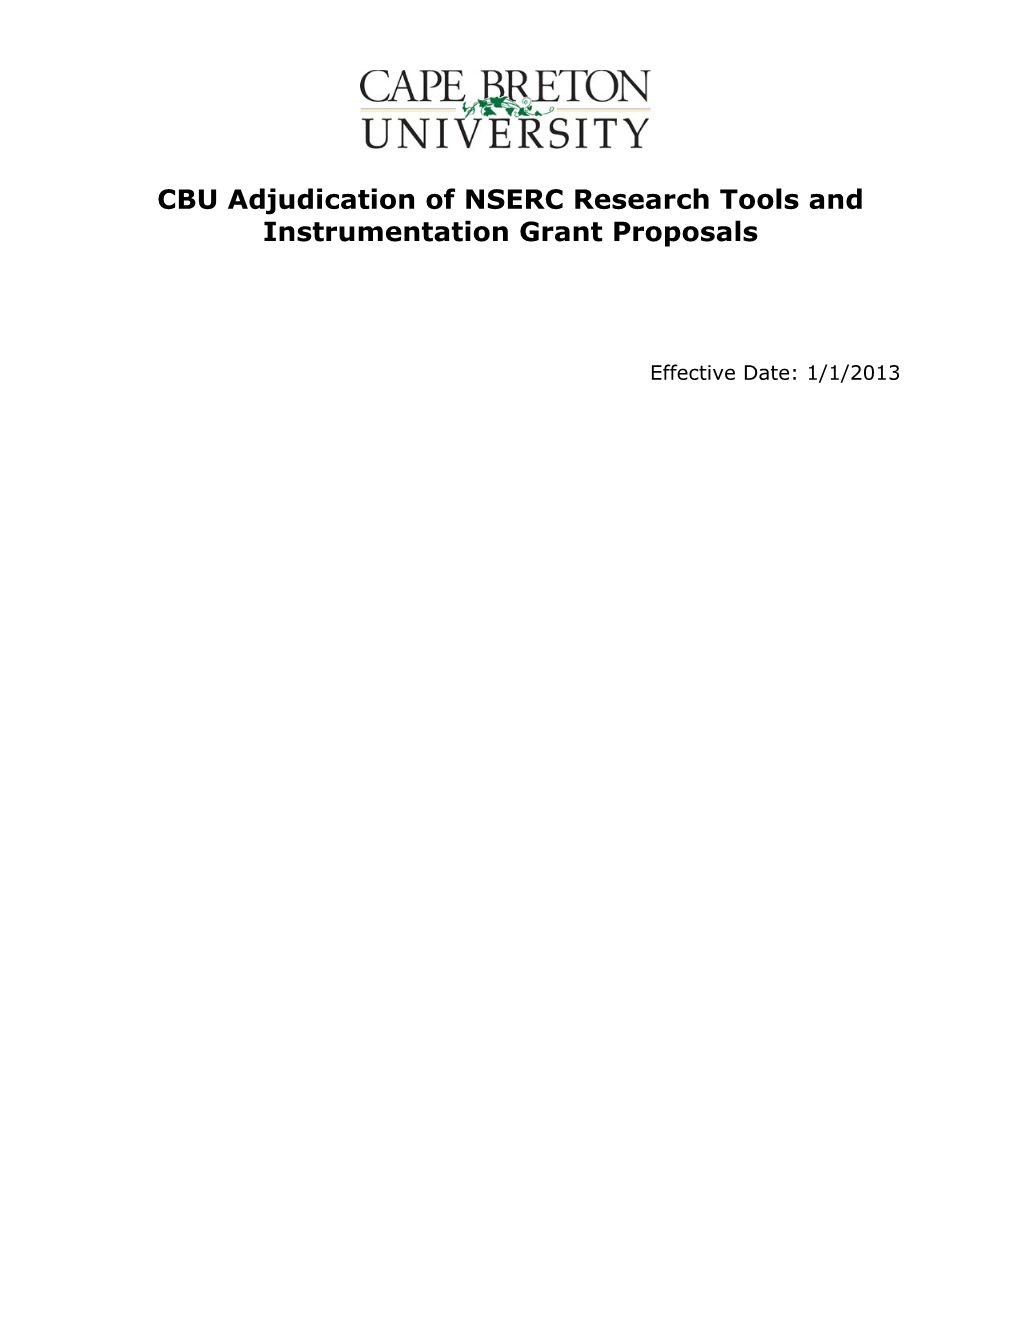 CBU Adjudication of NSERC Research Tools and Instrumentation Grant Proposals